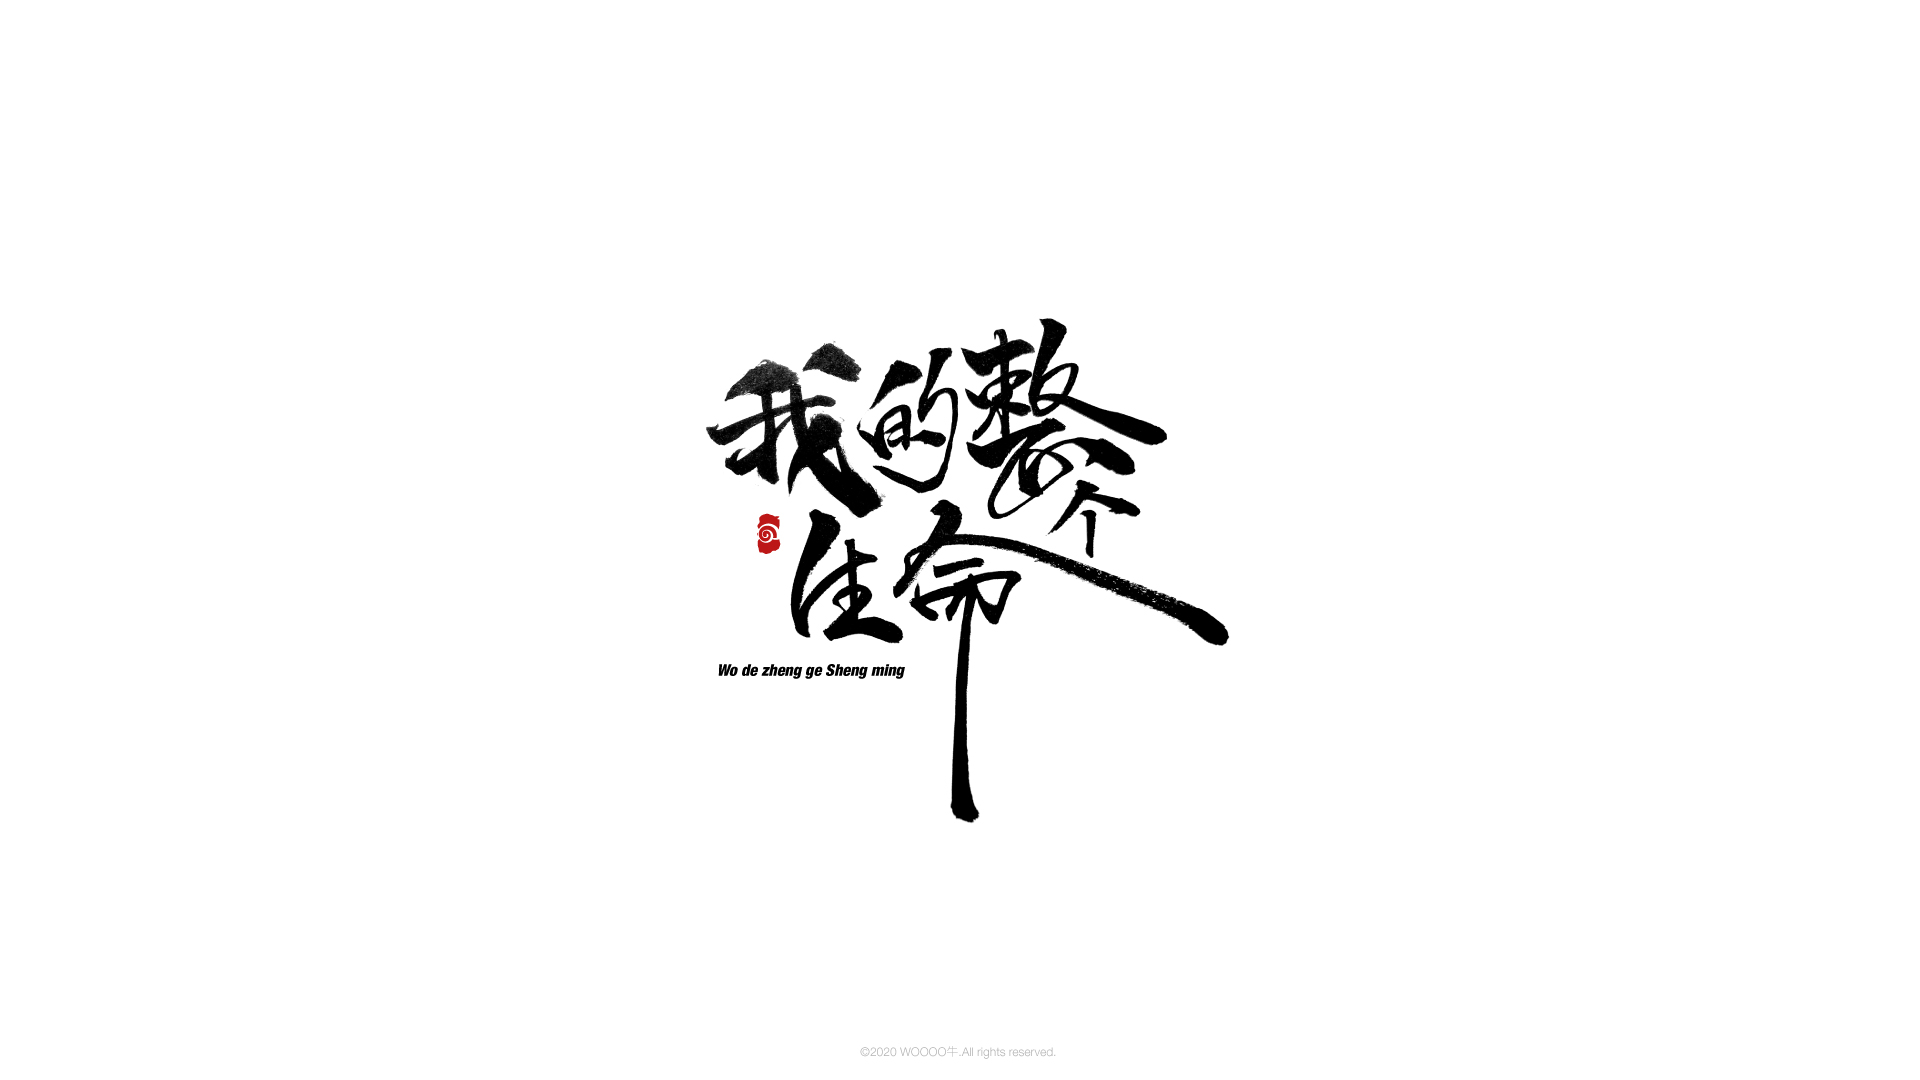 Chinese Creative Writing Brush Font Design-Kochakin's famous saying